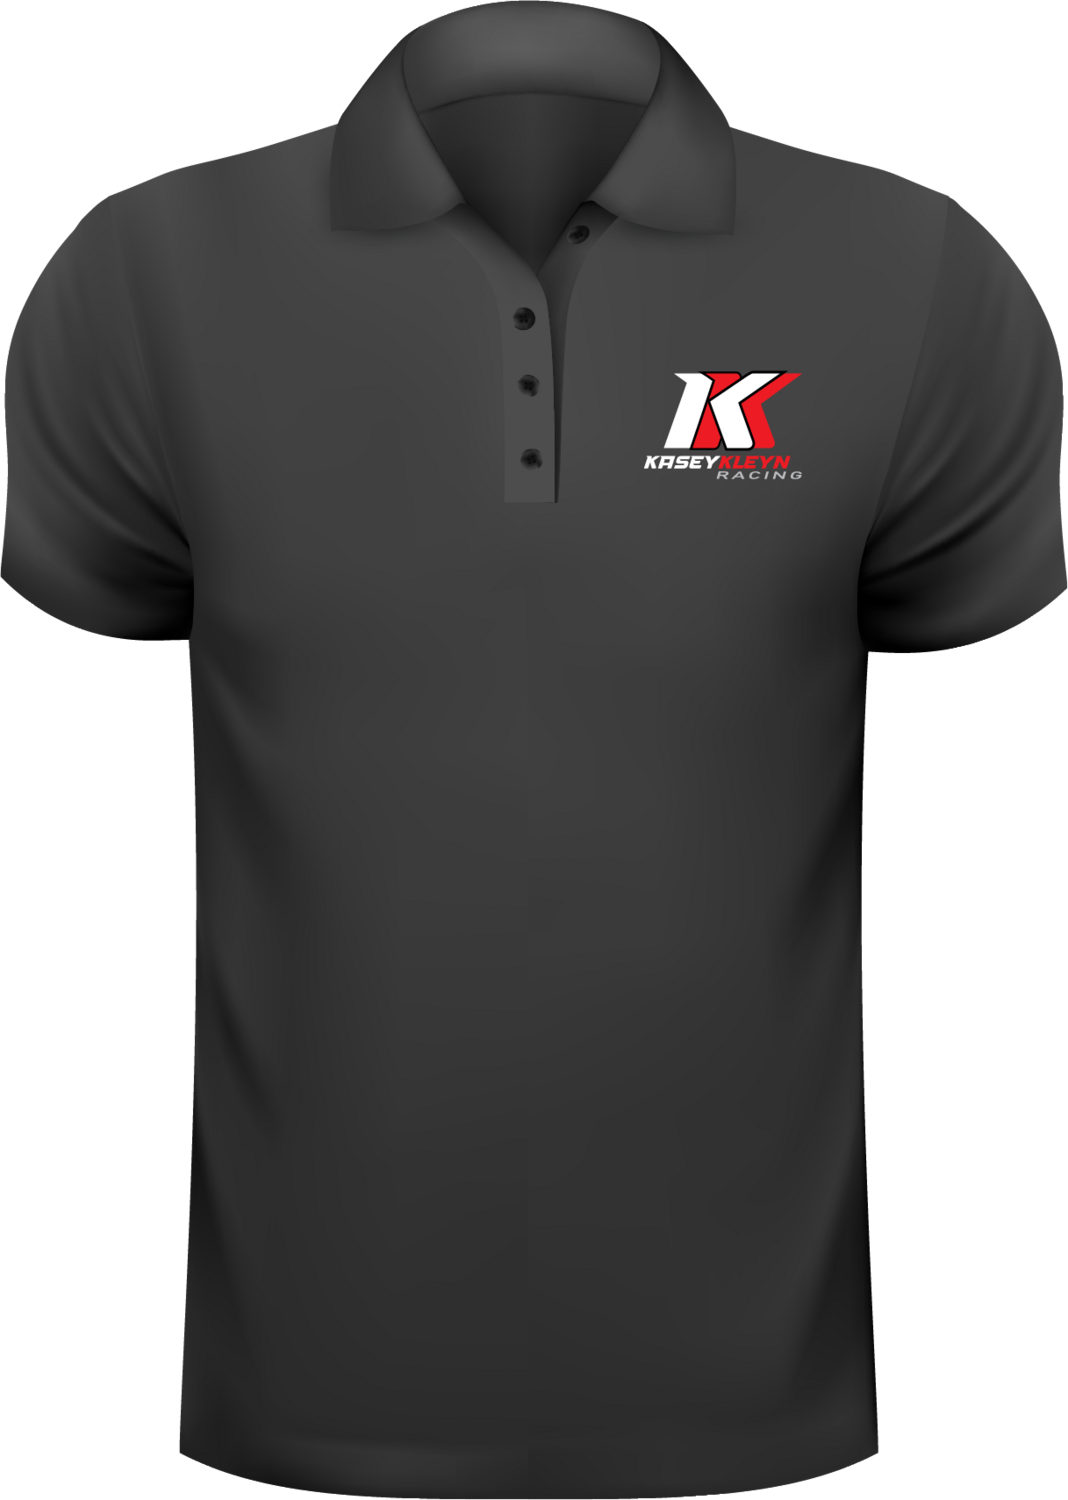 Kasey Kleyn Embroidered Polo Shirt